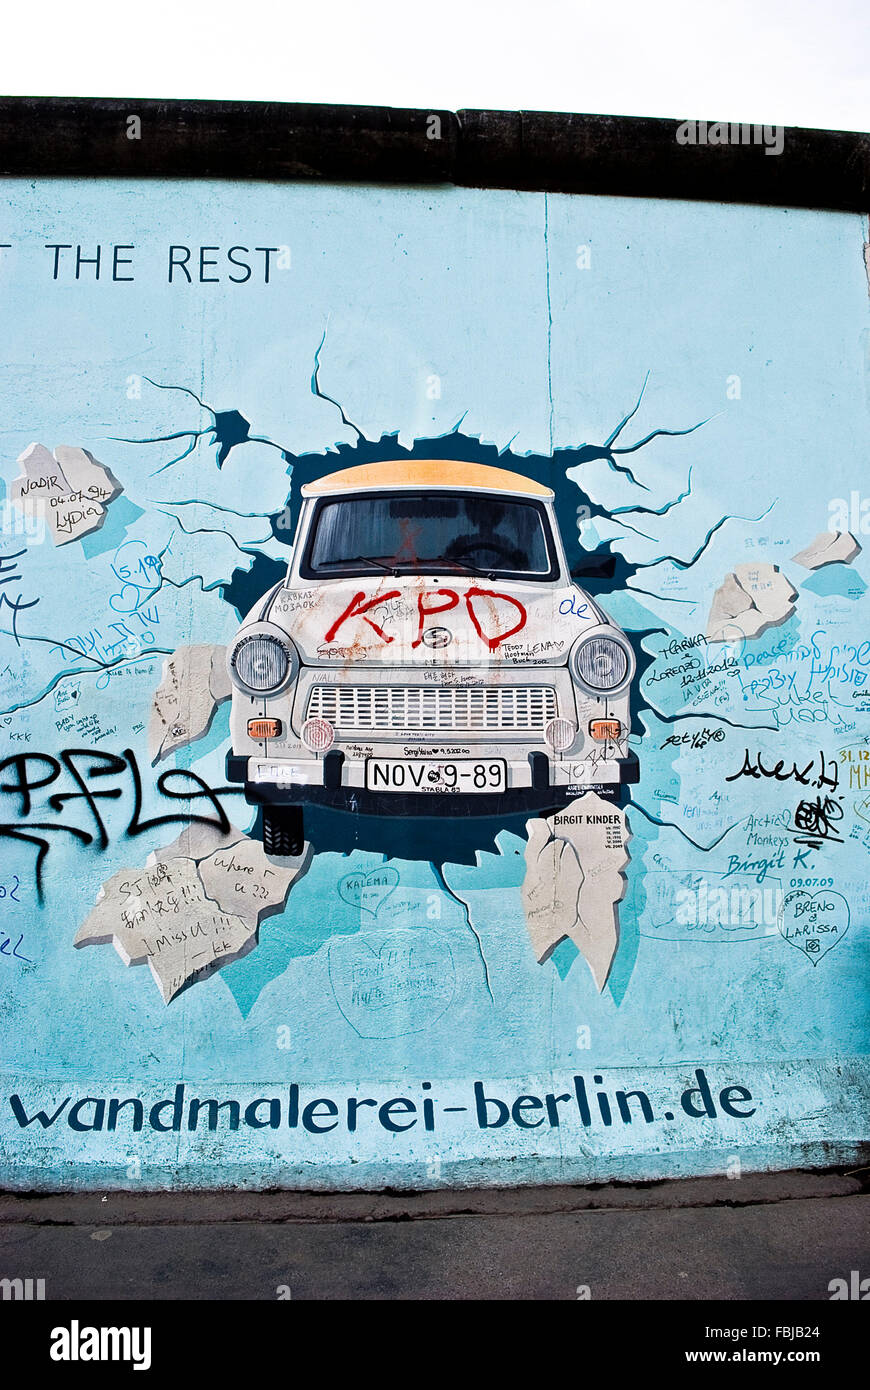 Test The Best (test The rest)' artist: Birgit Kinder, East Side Gallery, Berlin Stock Photo